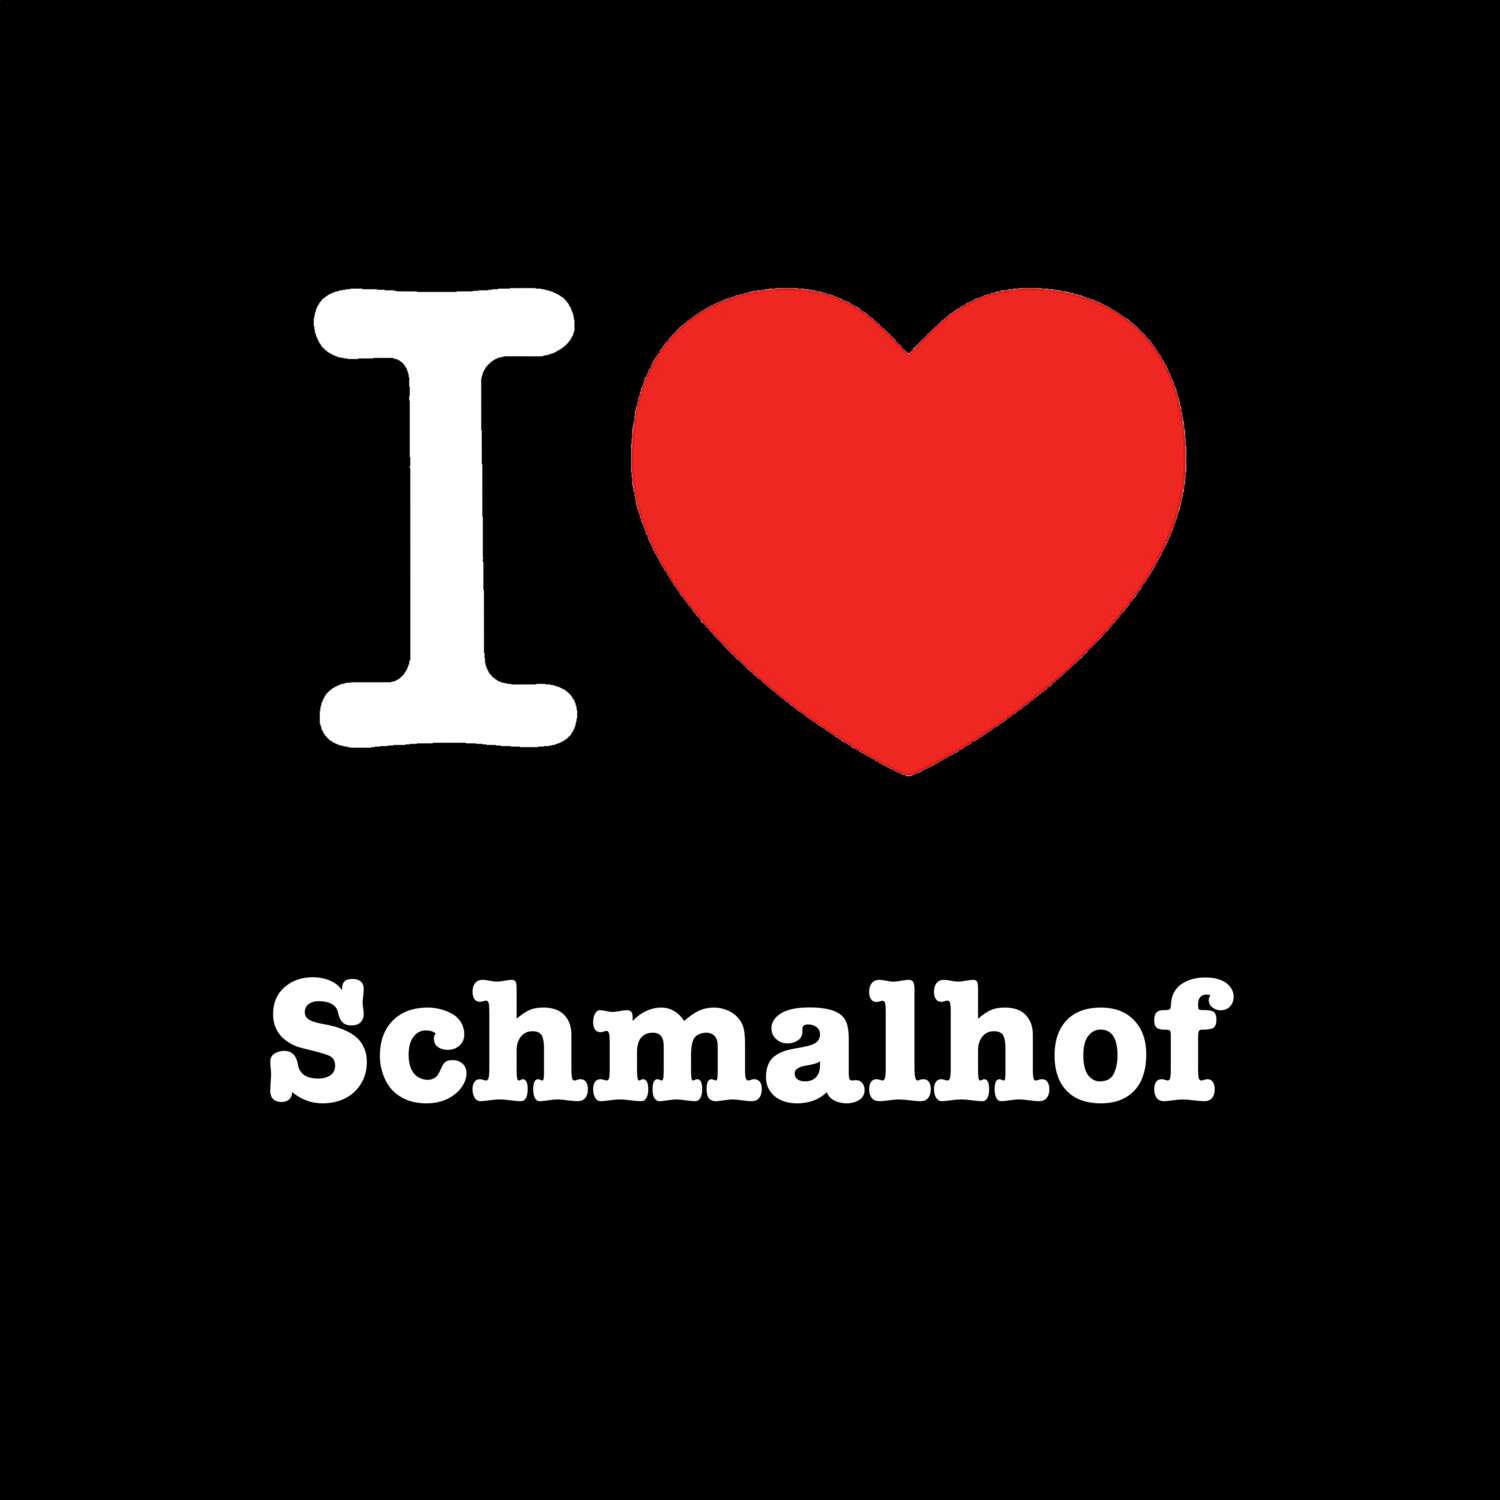 Schmalhof T-Shirt »I love«